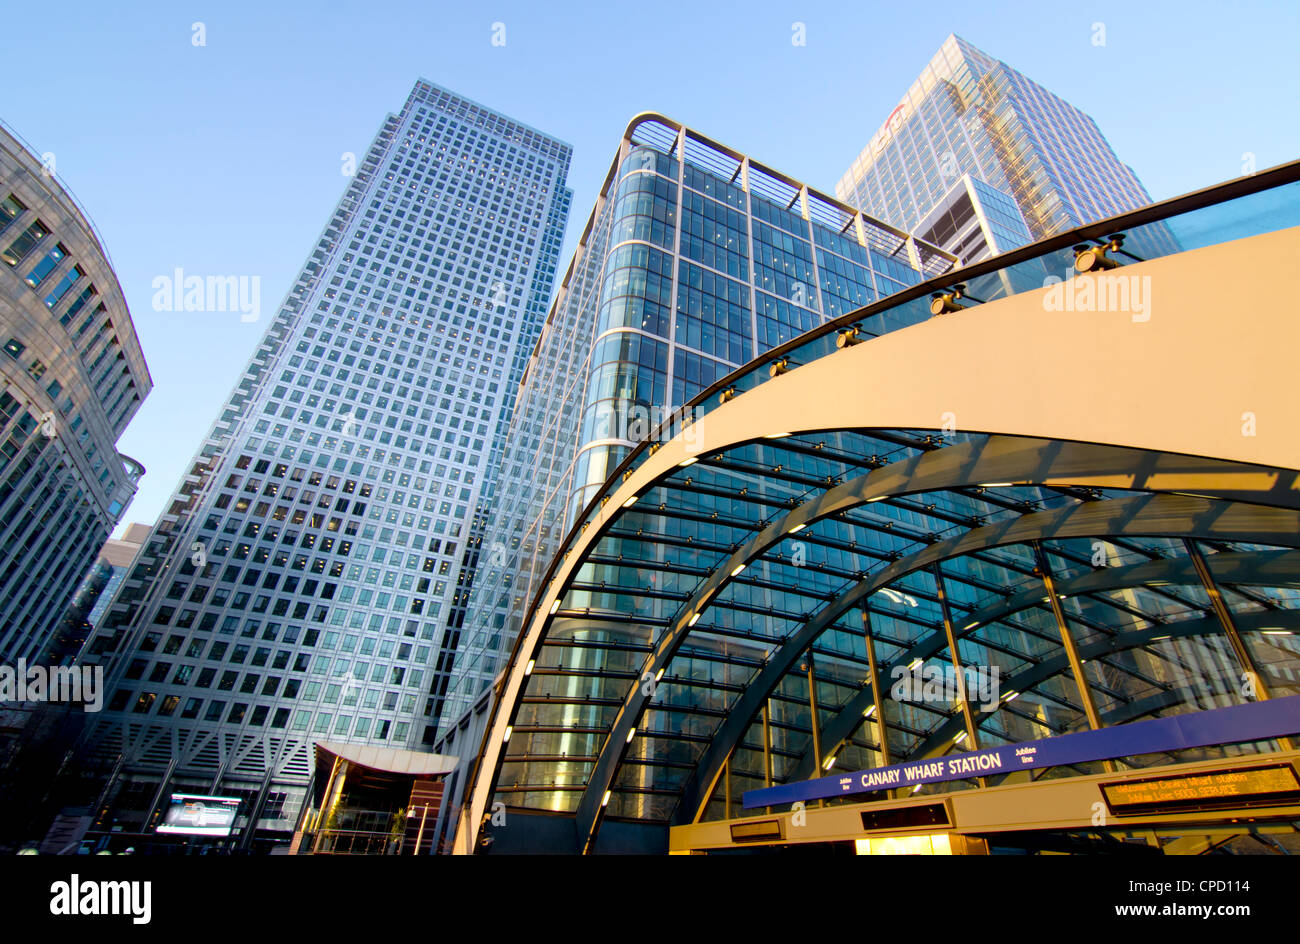 Canary Wharf Station, Isle of Dogs, Docklands, London, England, United Kingdom, Europe Stock Photo